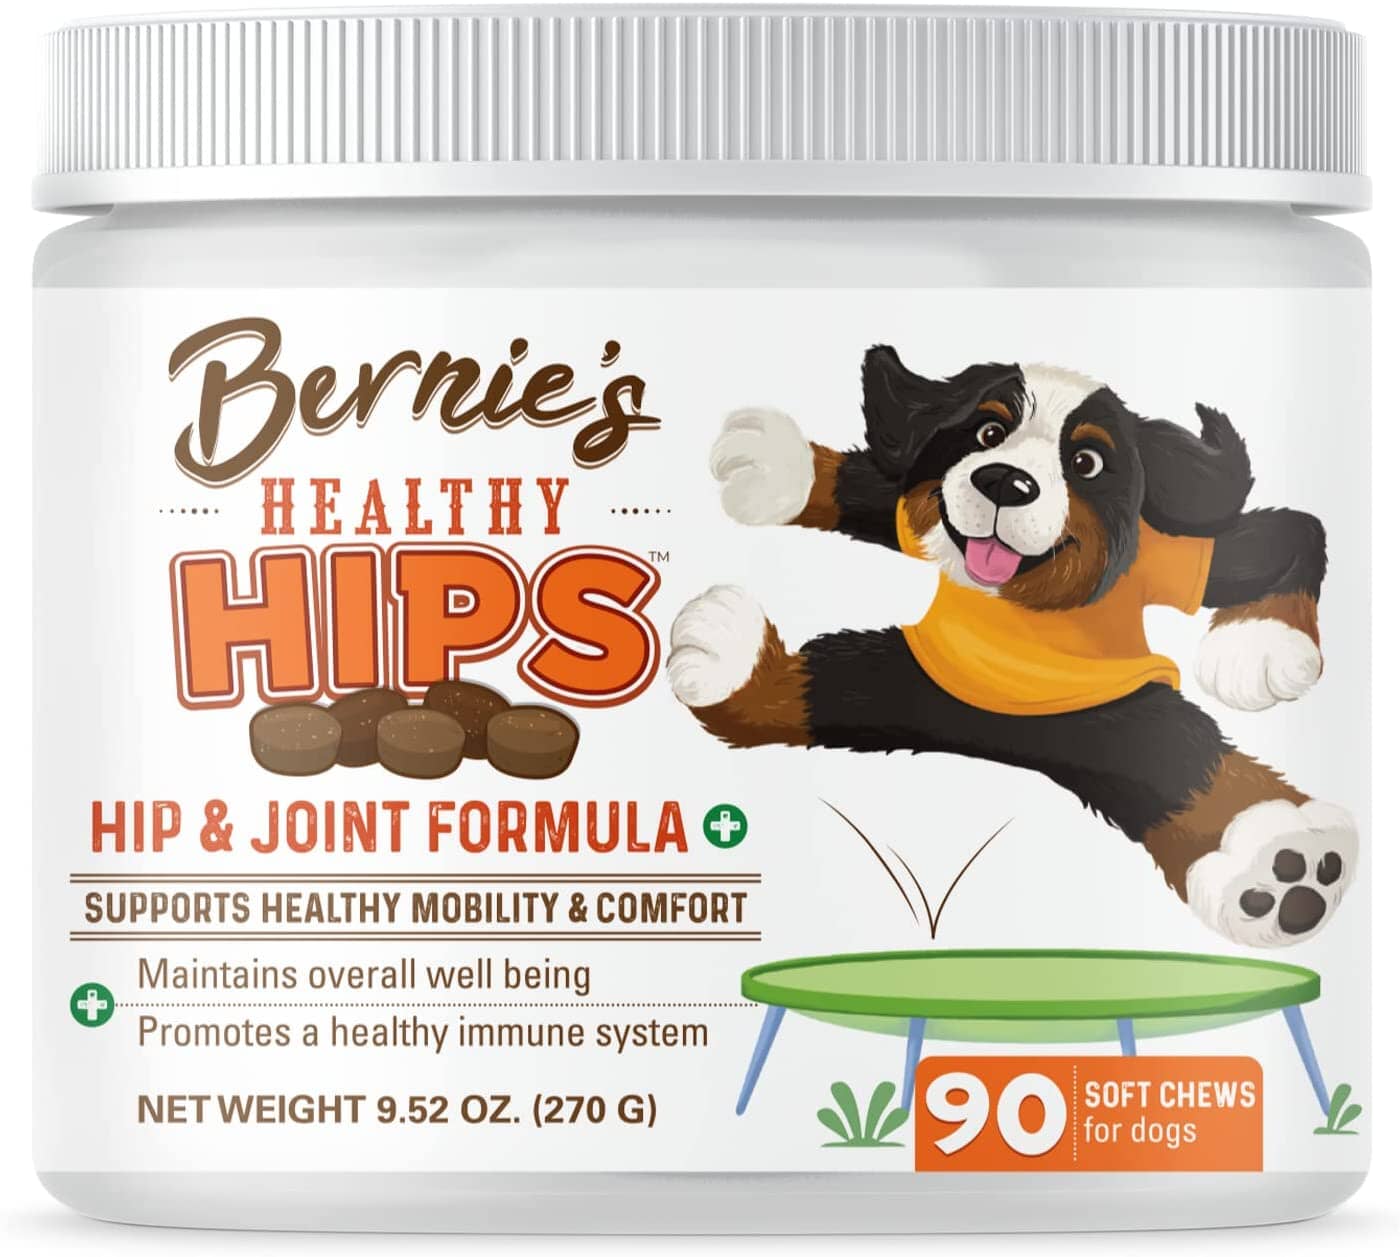 Bernie's Healthy Hips Hip & Joint Supplement Bernie's Best 